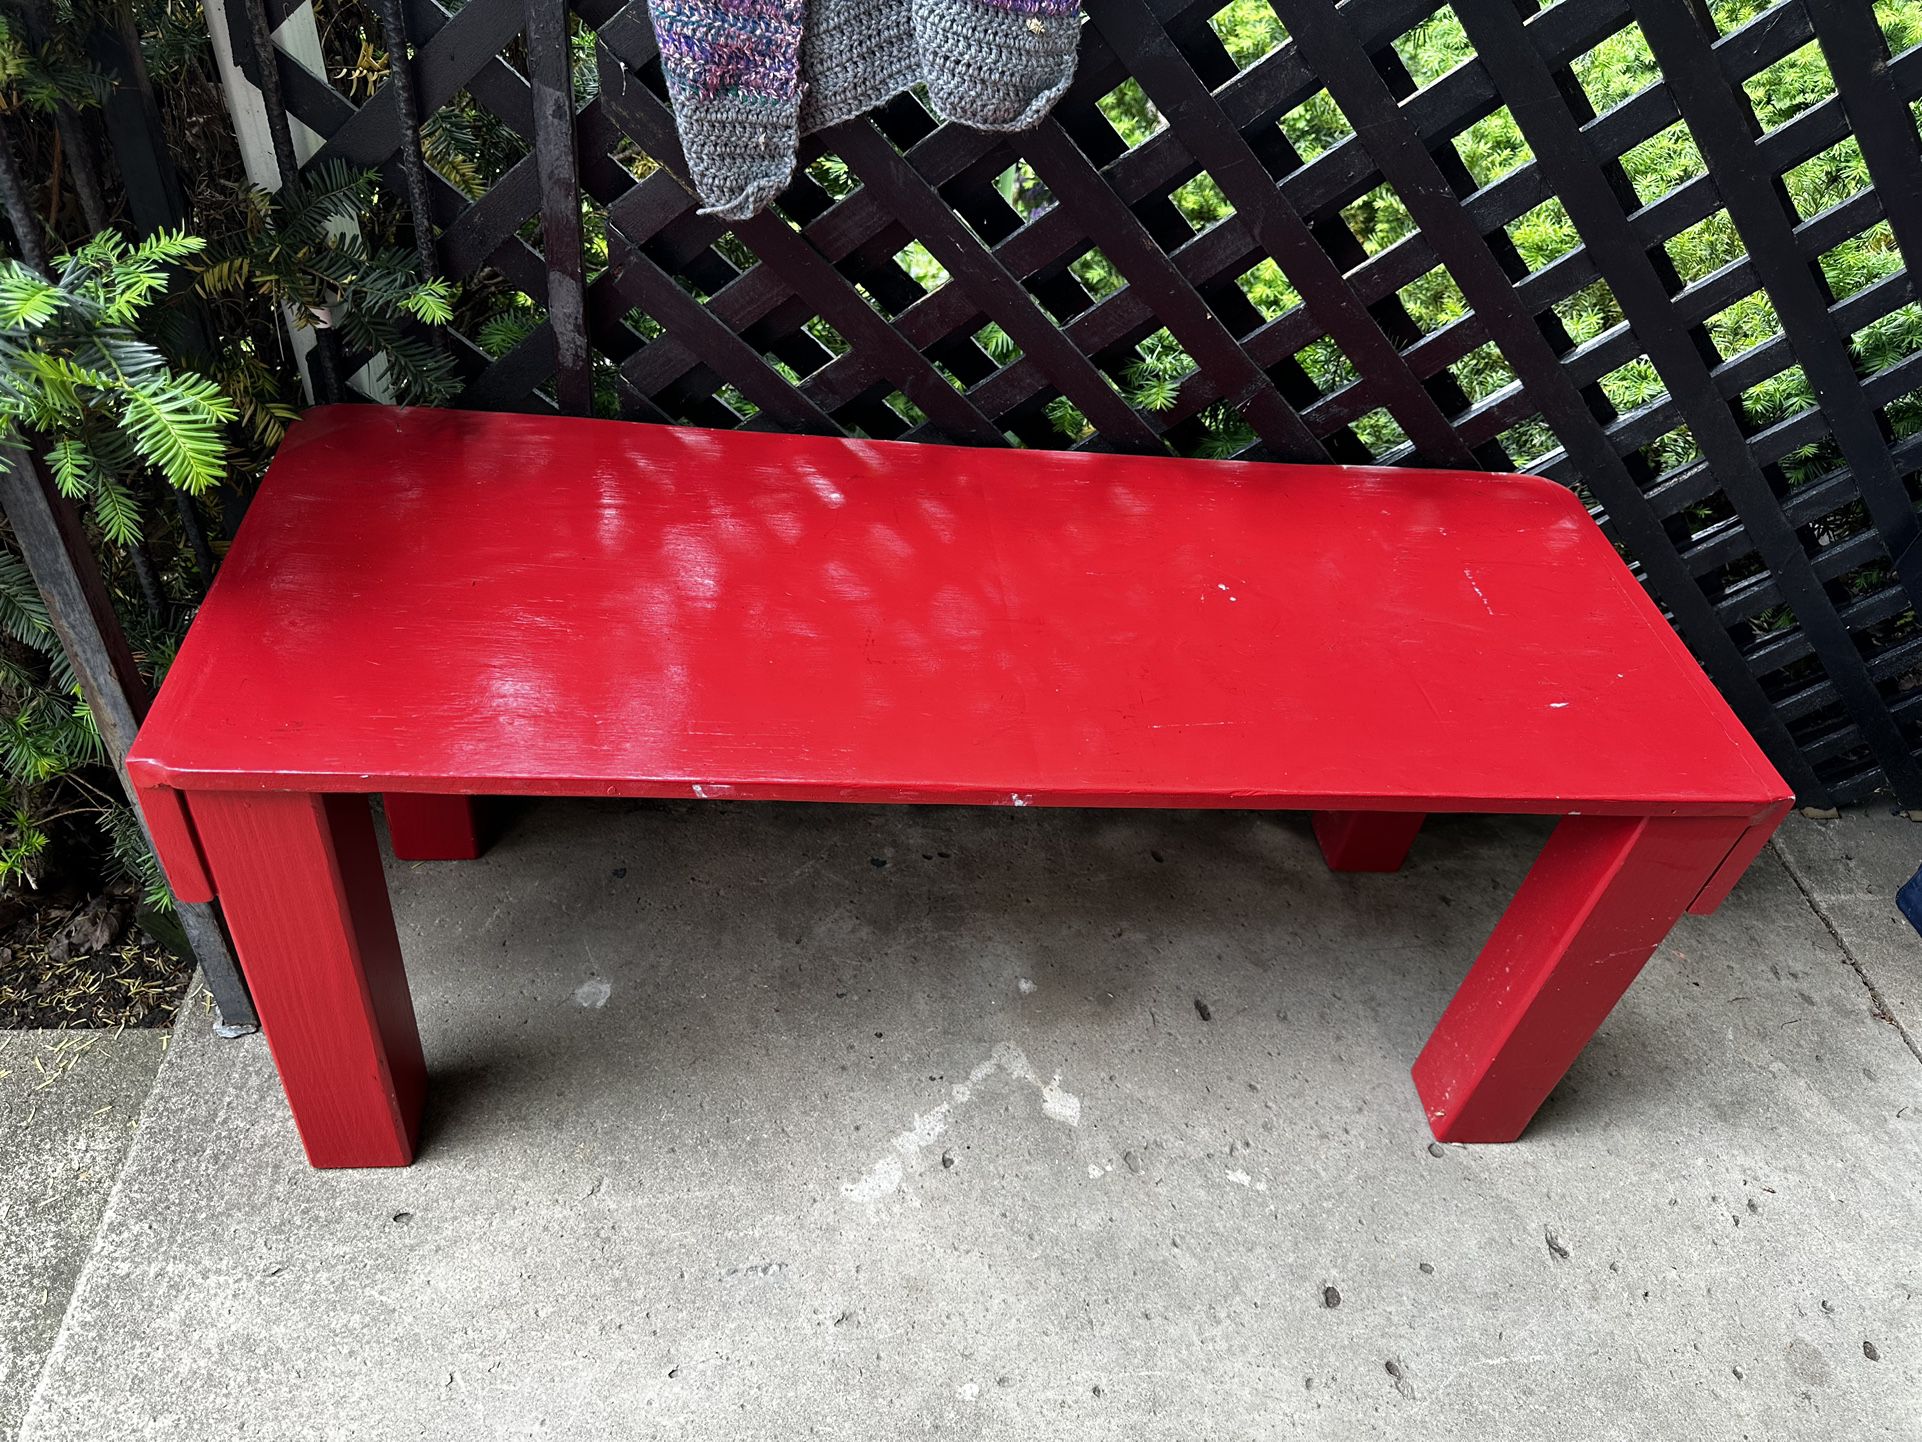 red bench 